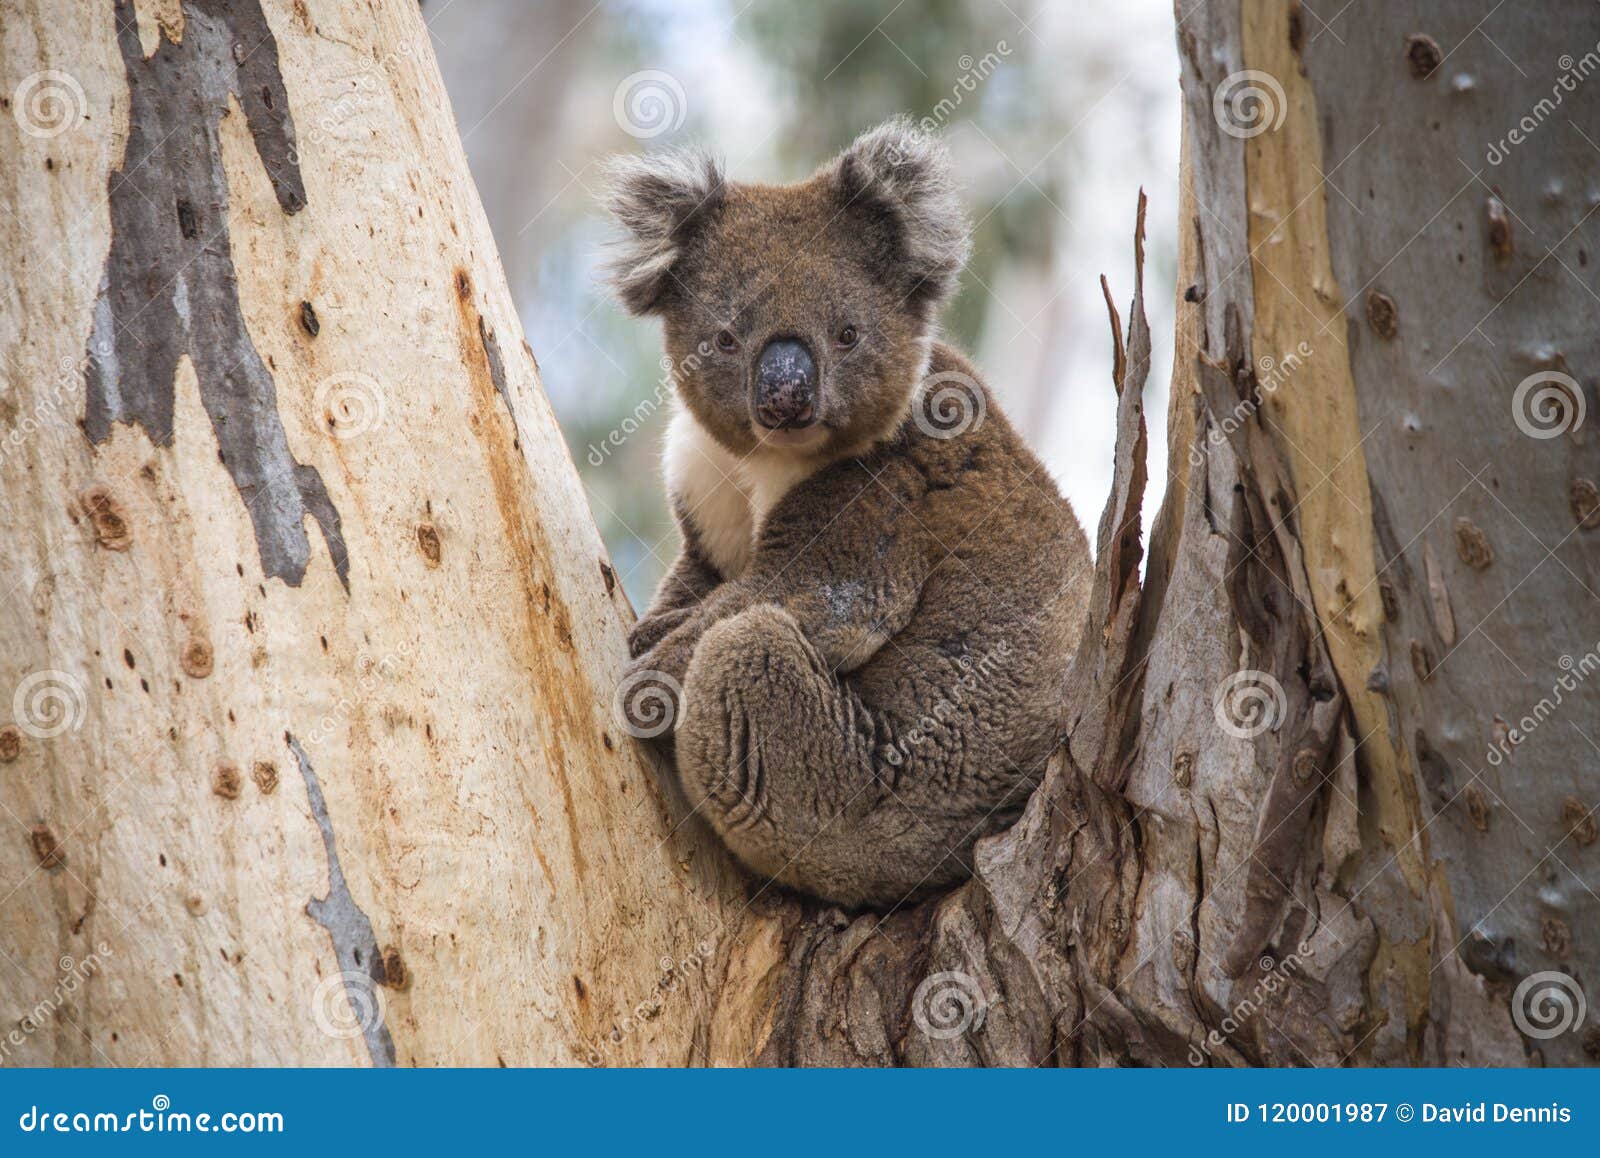 close-up of wild koala in the eucalyptus forests of kangaroo island, south australia